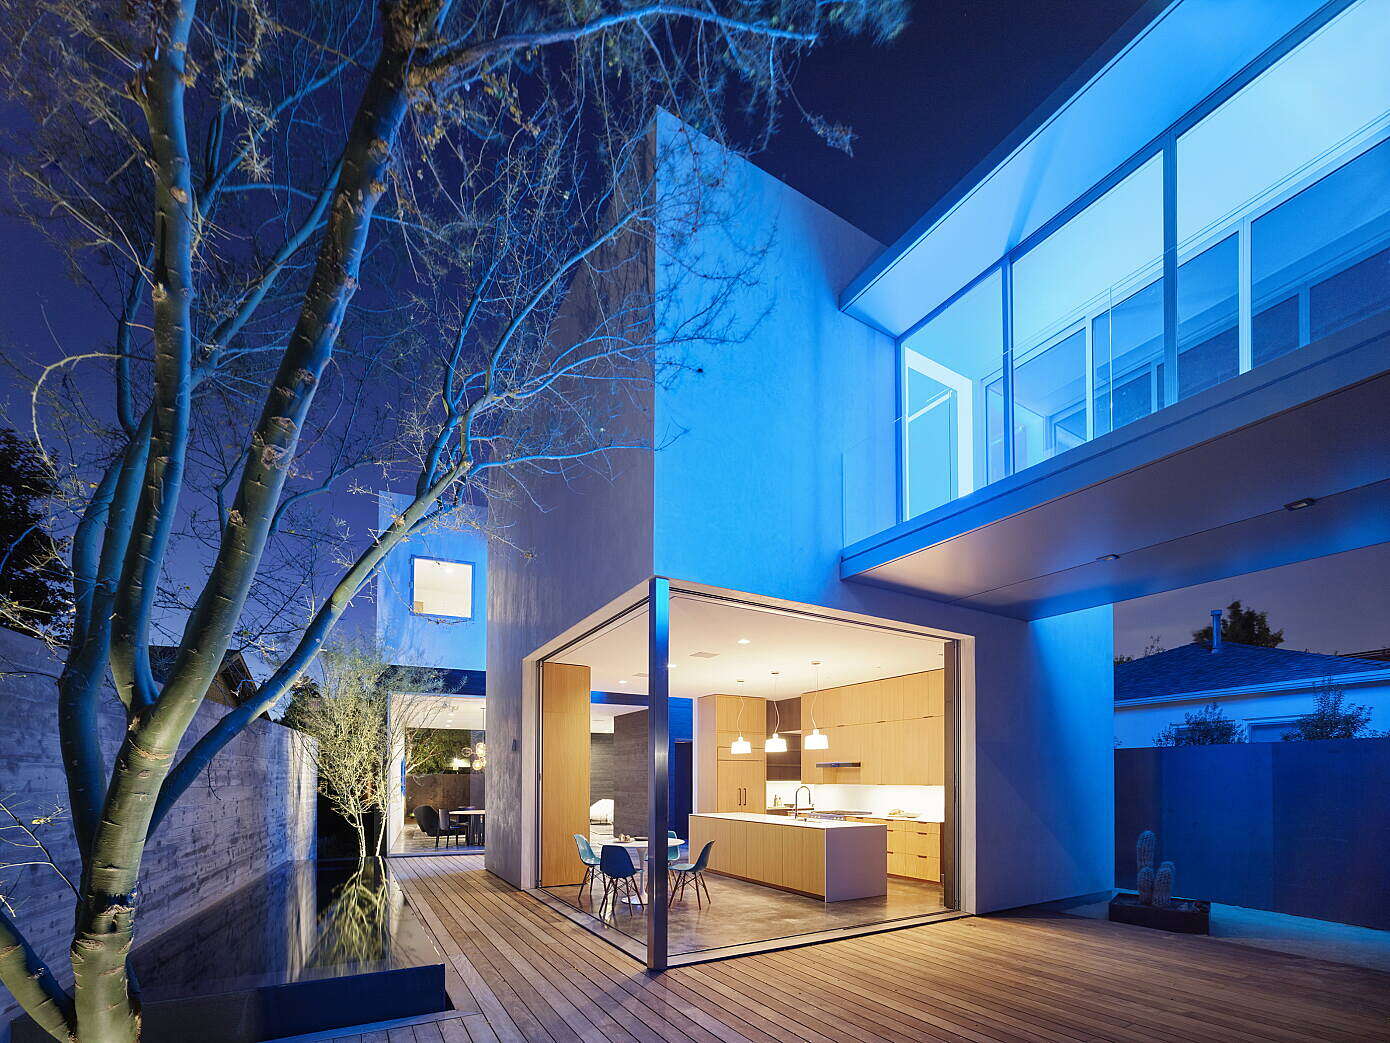 Spectral Bridge House by Ehrlich Yanai Rhee Chaney Architects